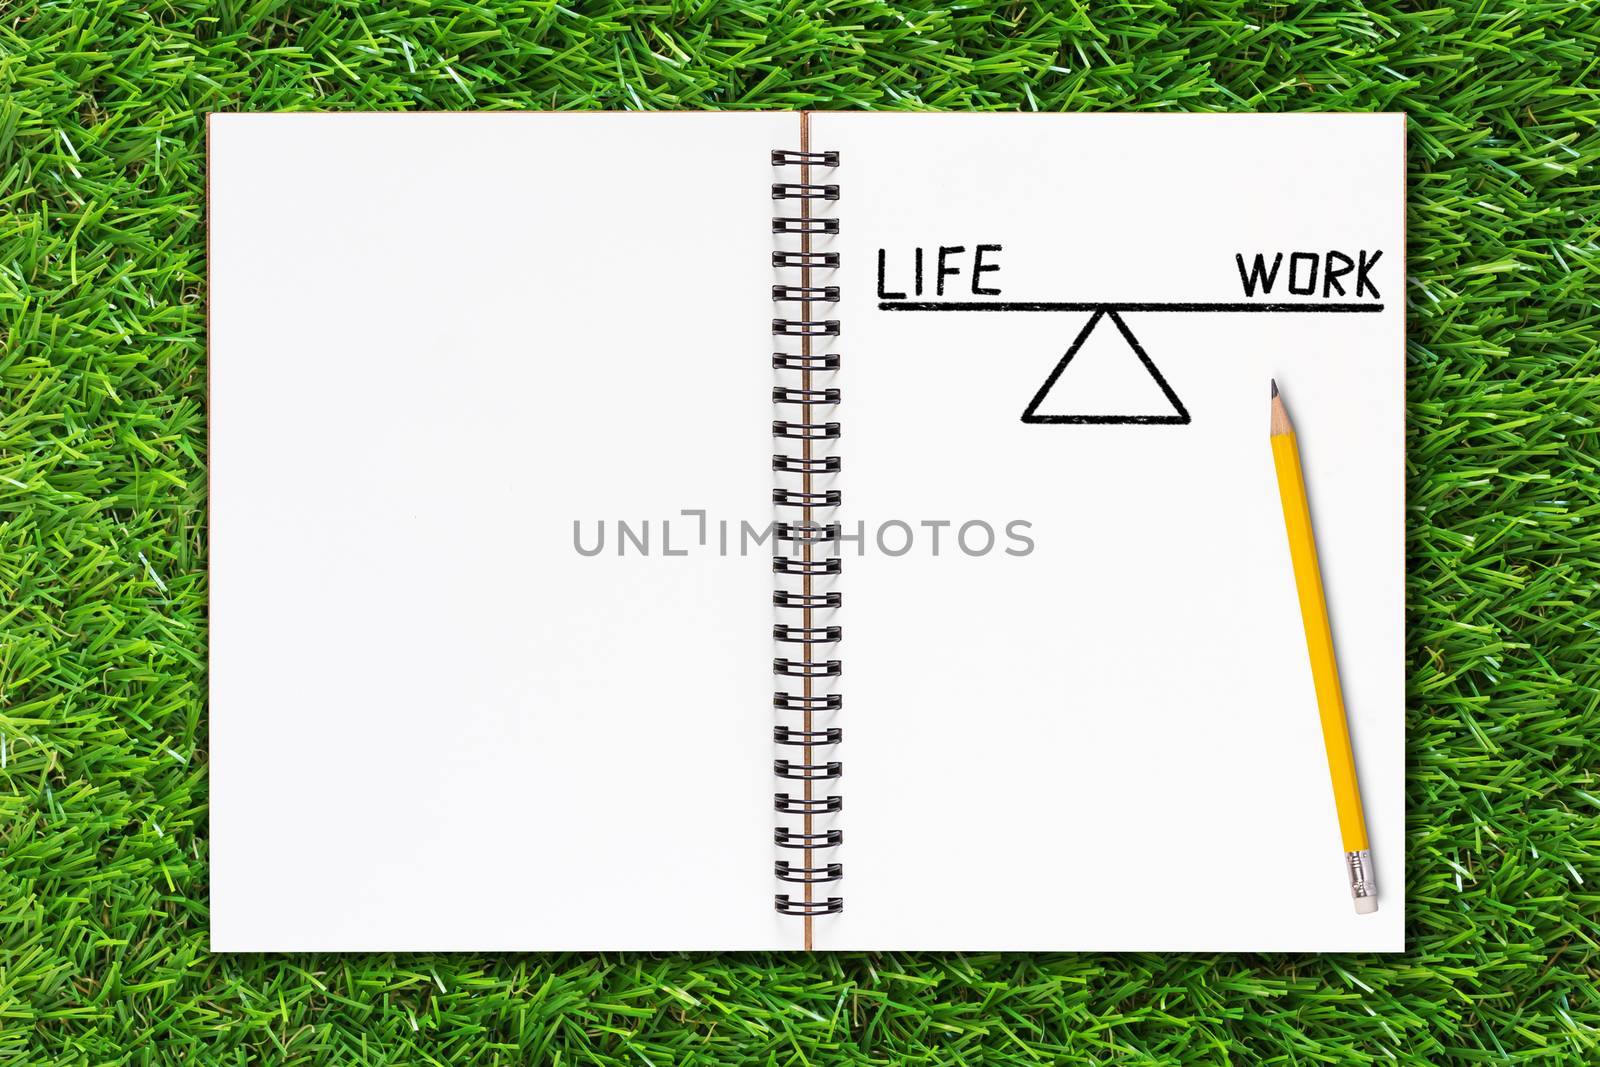 Work Life Balance by Fnatic12